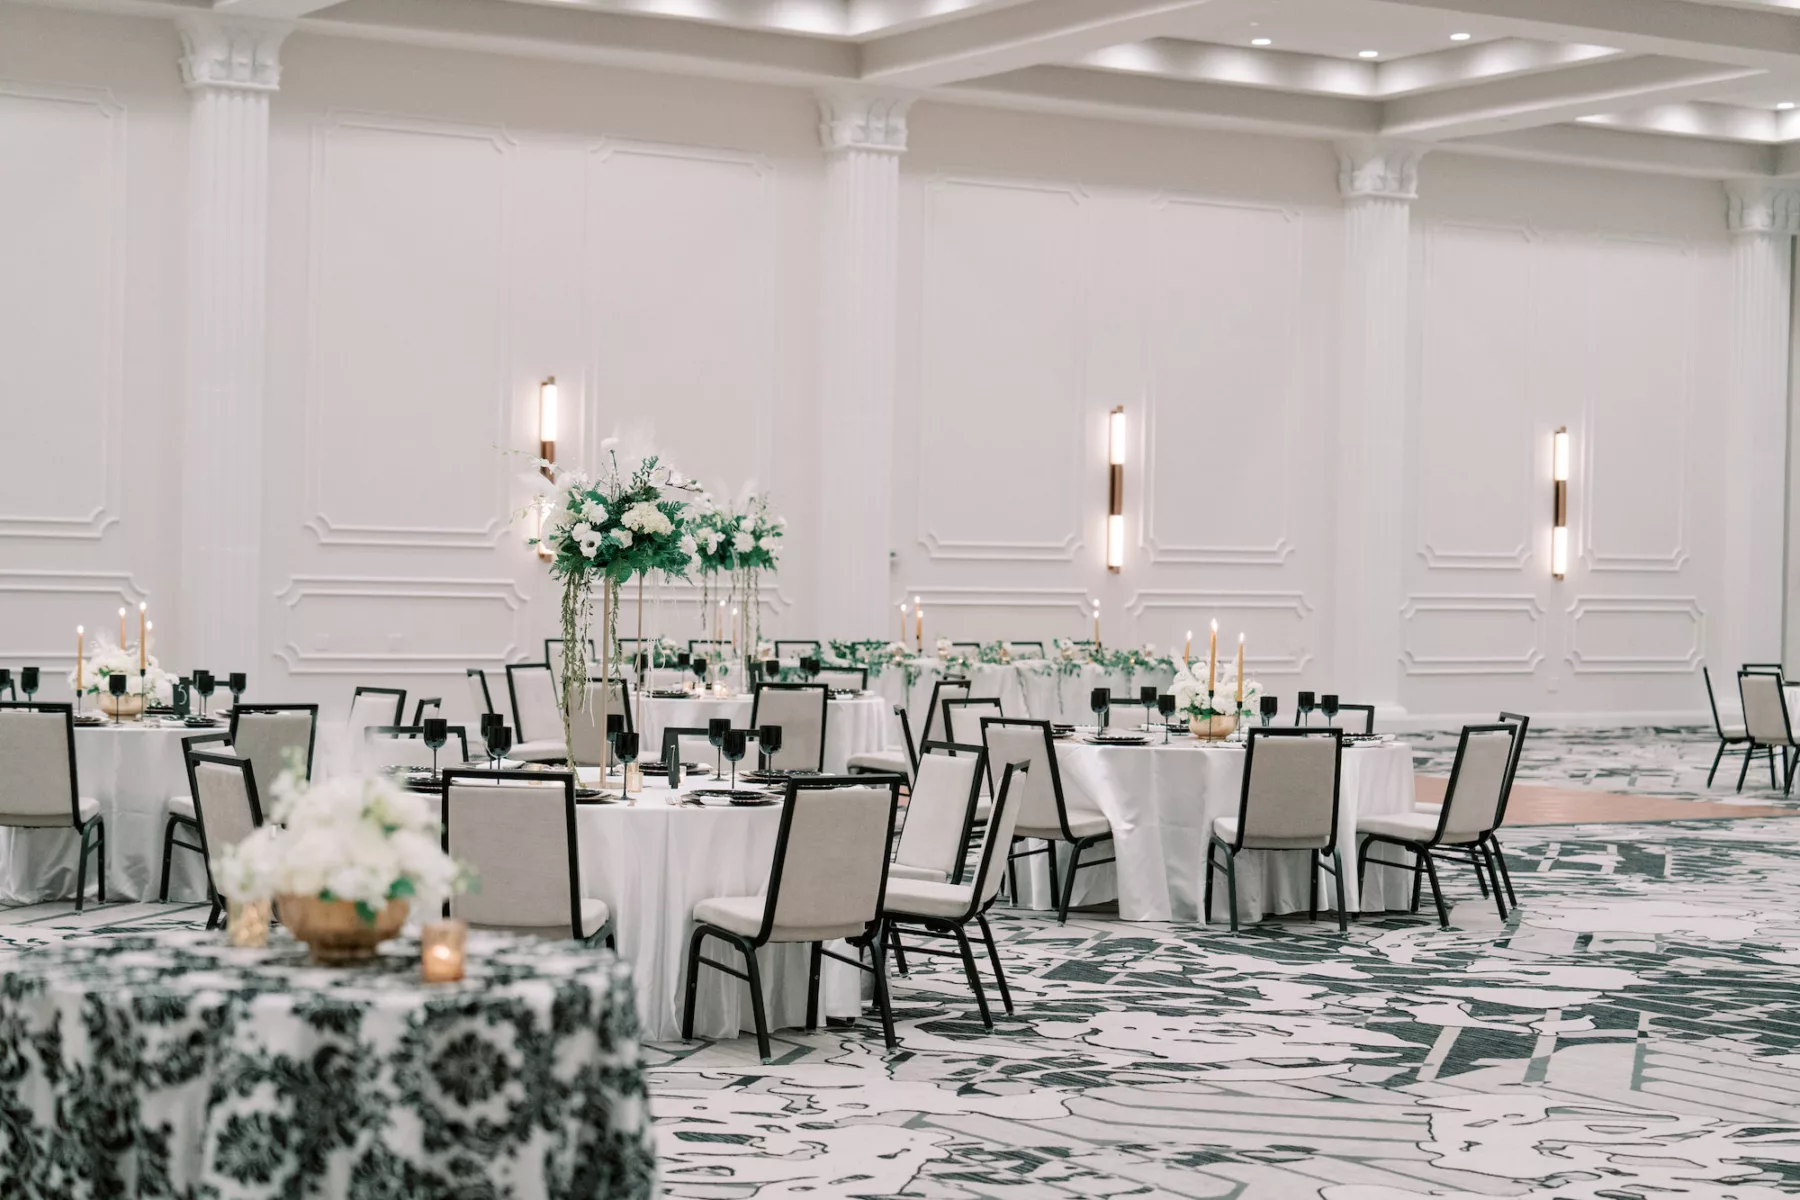 Modern Black, White, and Gold Floridan Ballroom Wedding Reception Inspiration | Tampa Bay Event Venue Hotel Flor